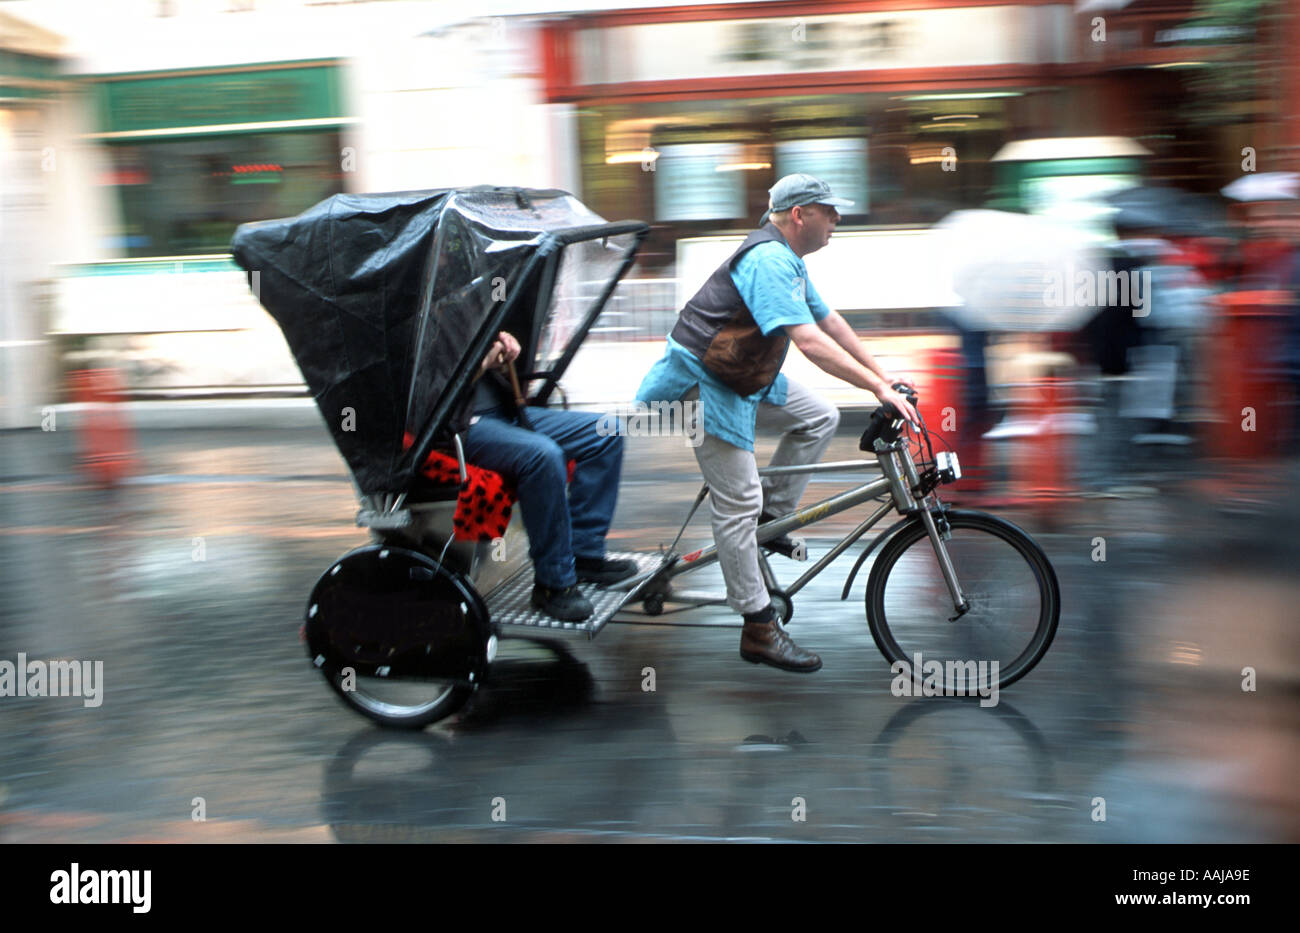 Rickshaw cycle in London Stock Photo